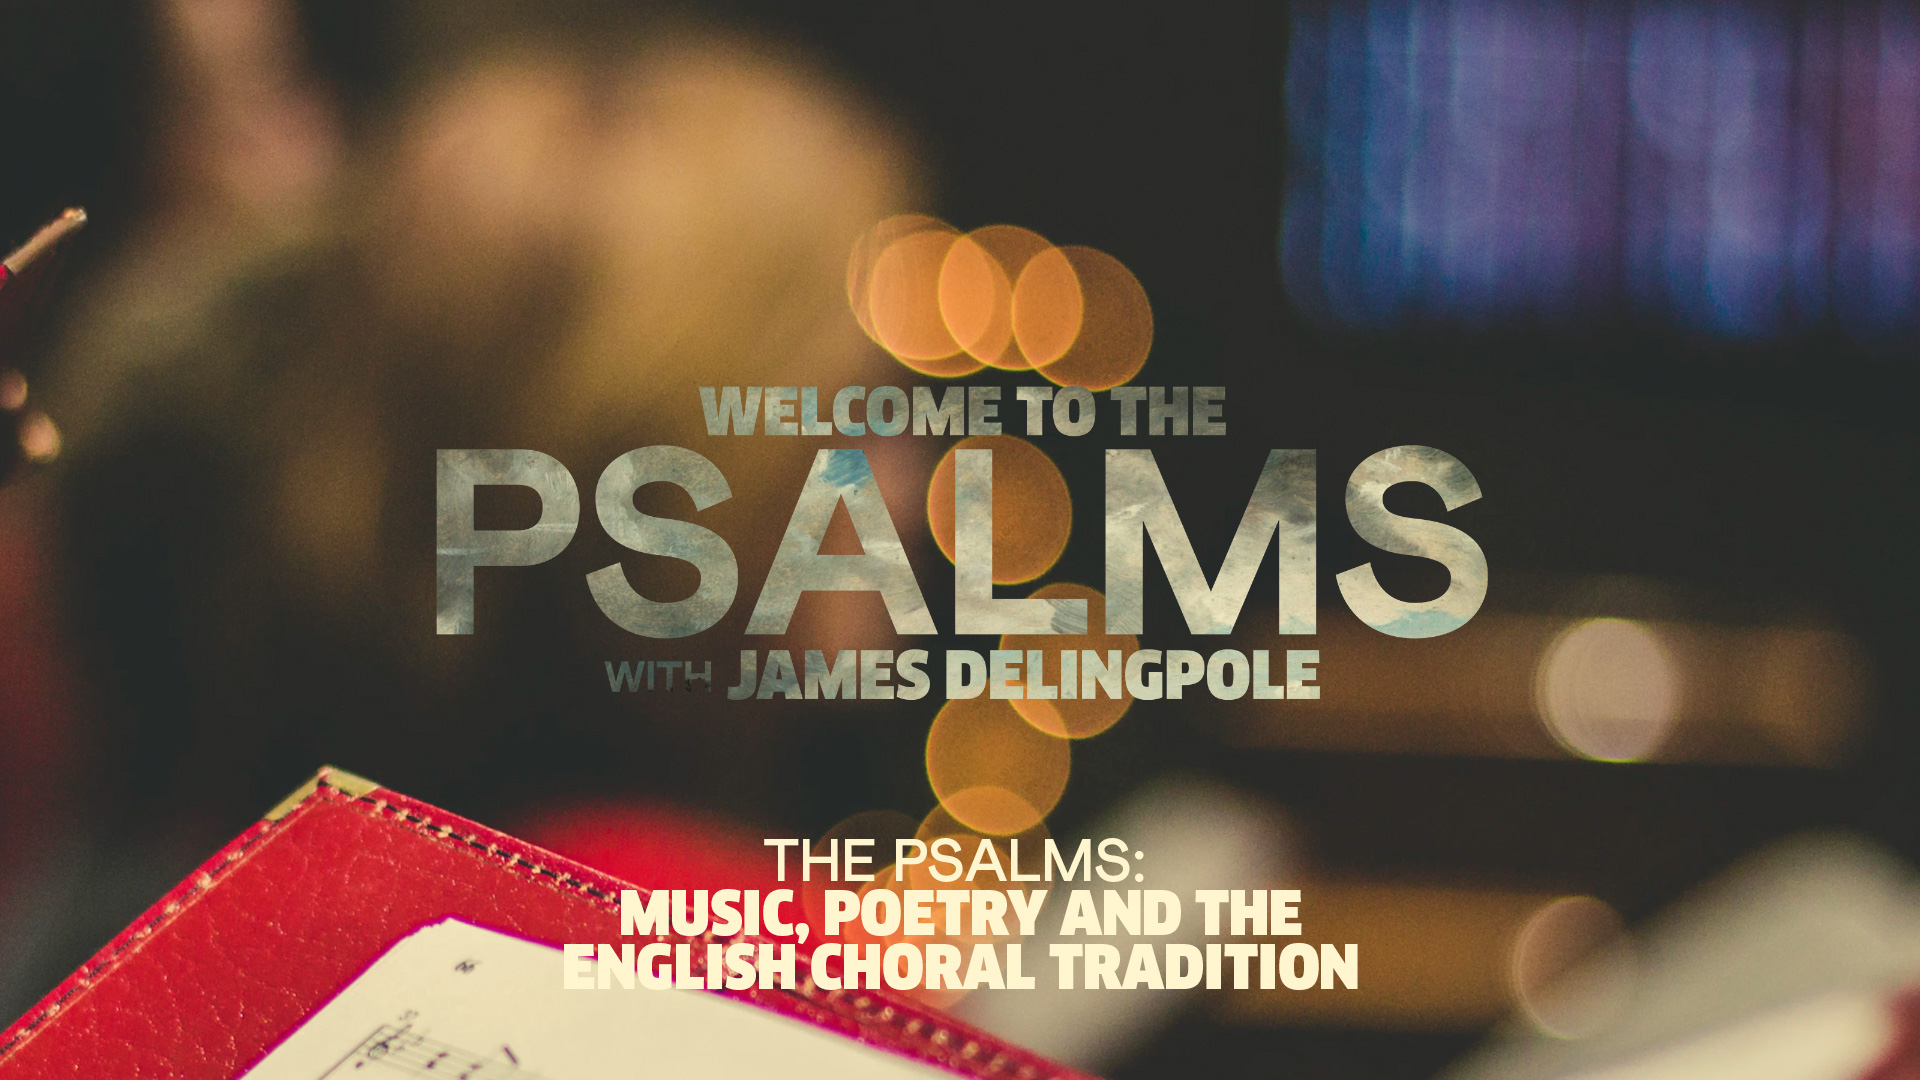 The Psalms